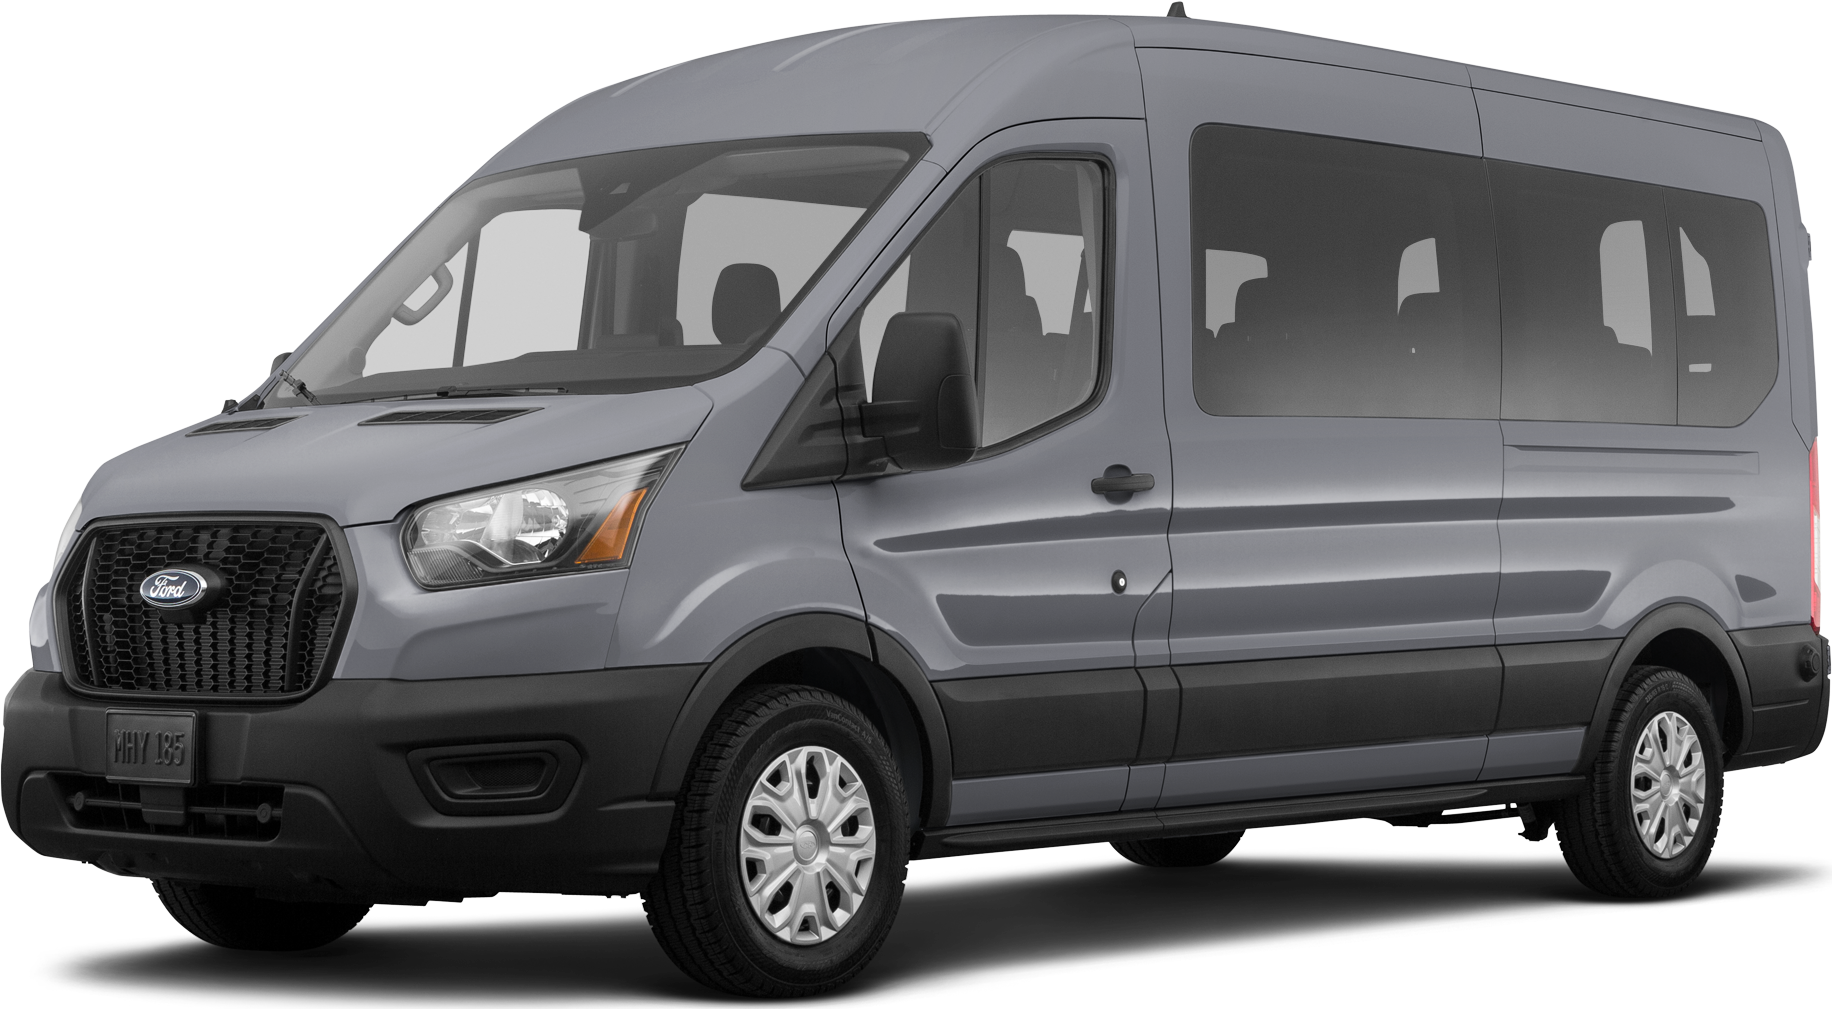 New 2022 Ford Transit 250 Crew Van Reviews, Pricing & Specs Kelley